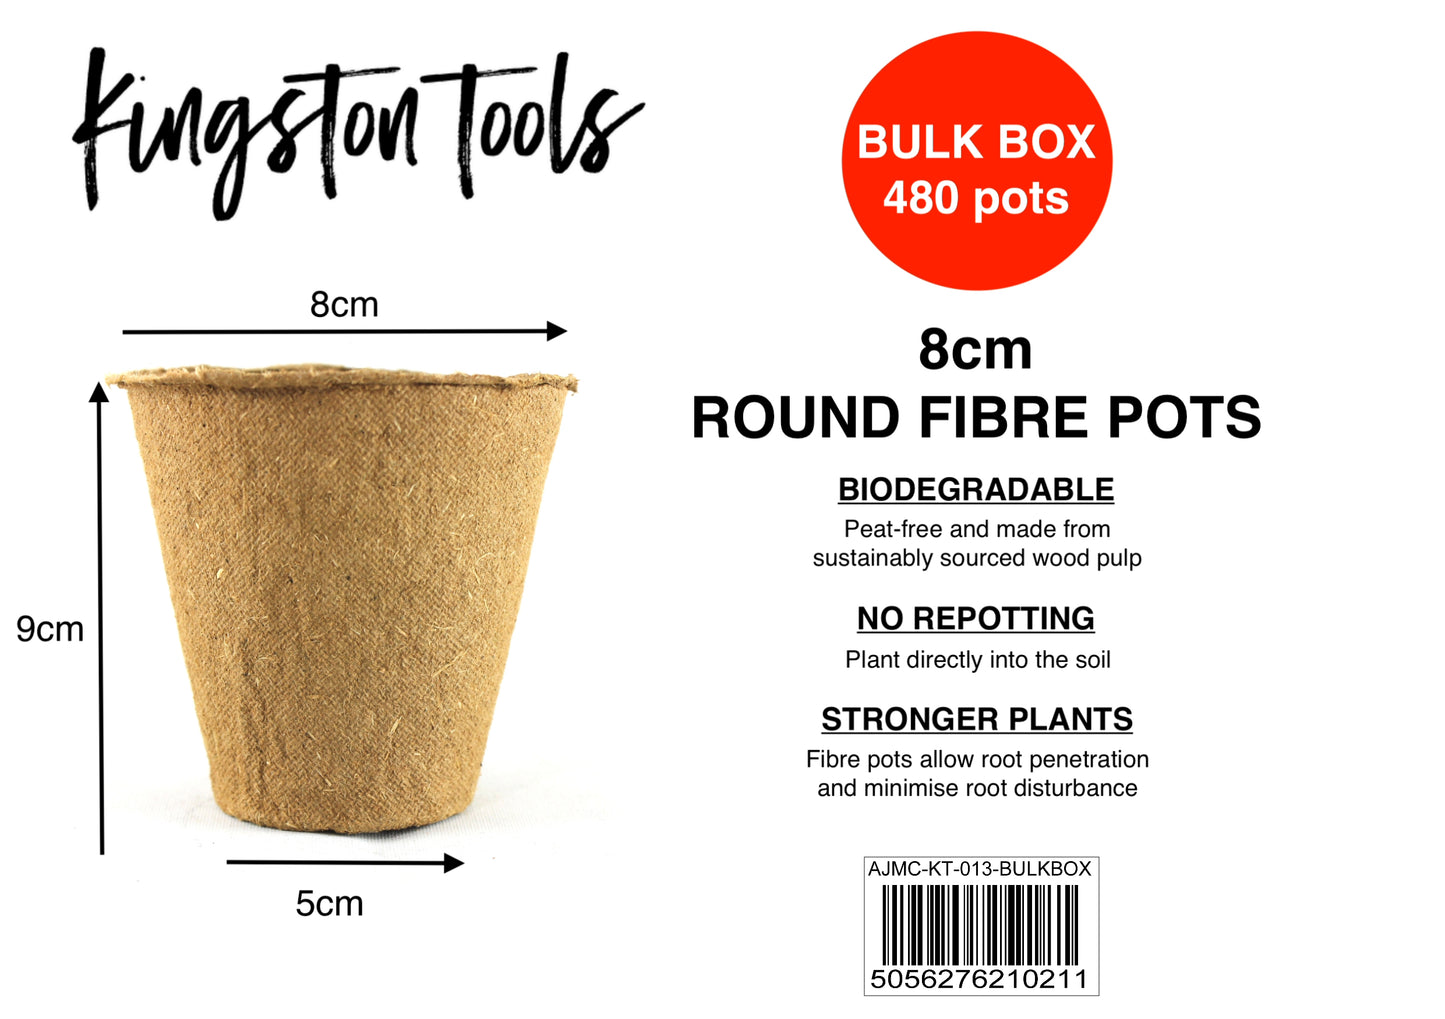 BULK BOX - 480x 8cm Round Fibre Pots by Kingston Tools